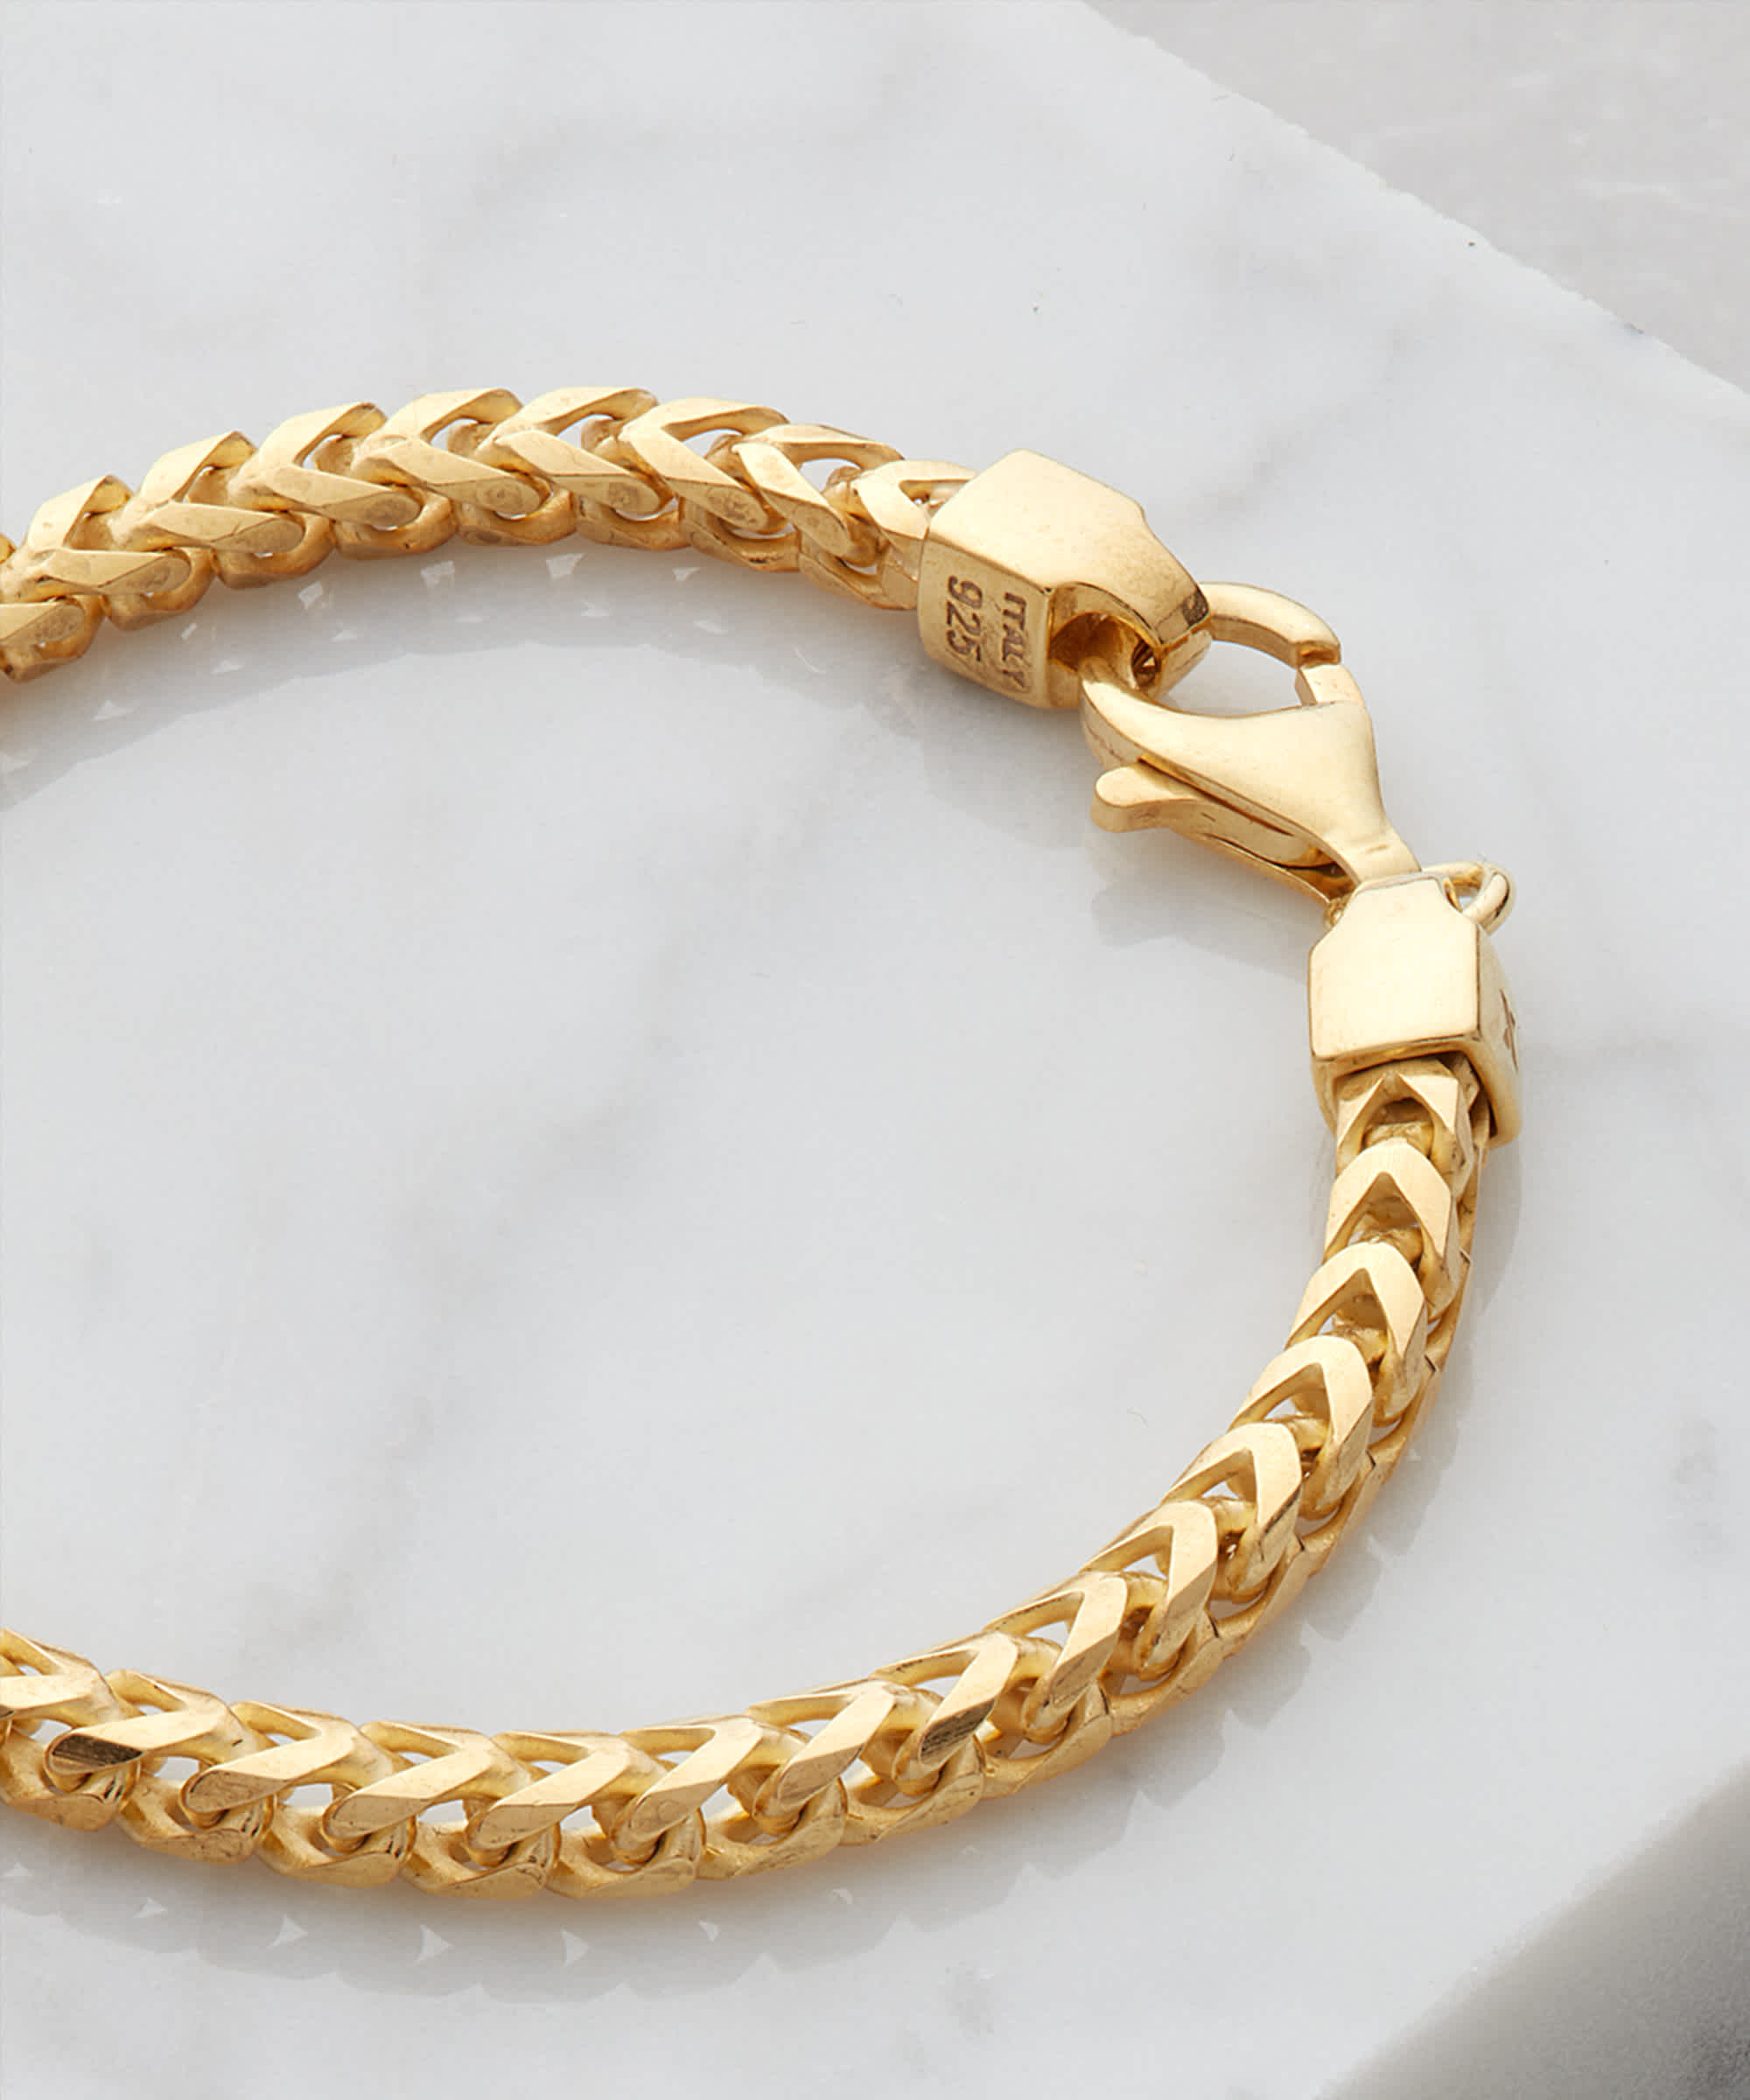 Mens Franco Bracelet Gold - Italian Made